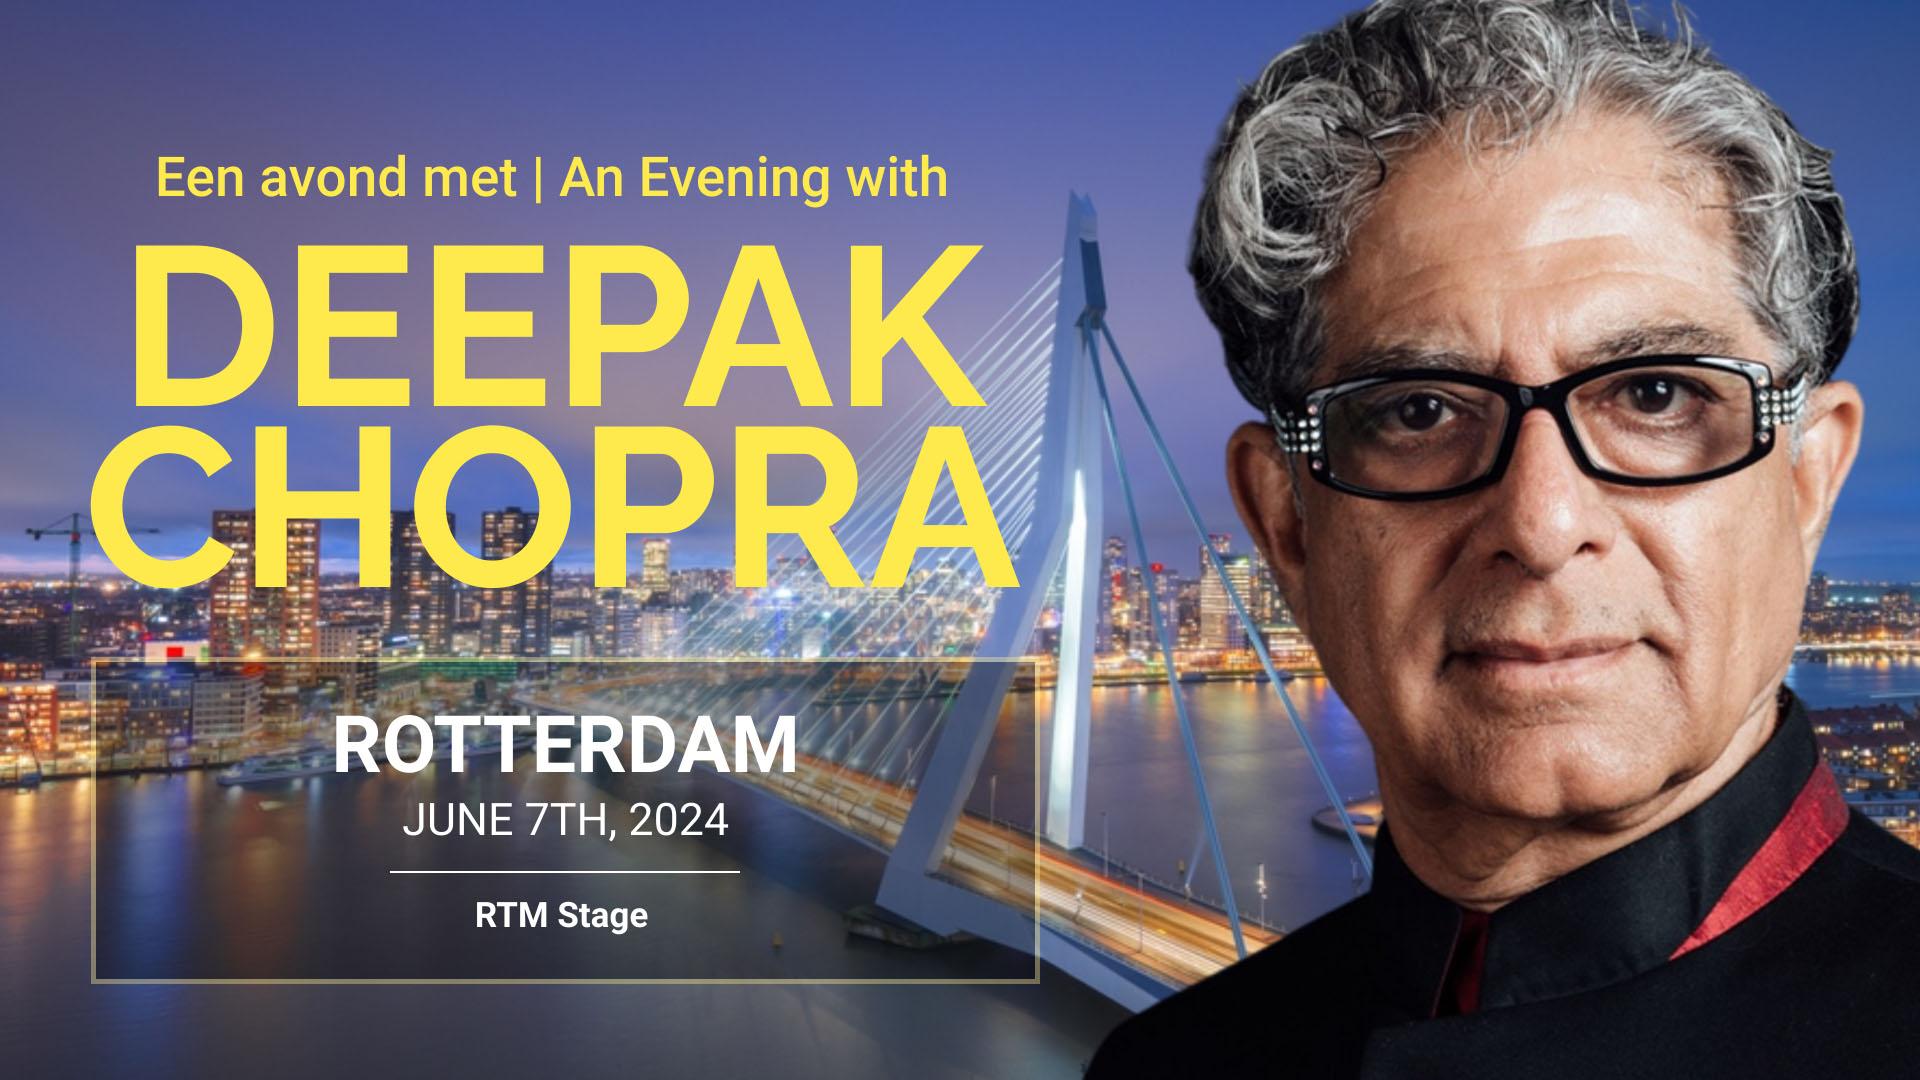 An Evening with Deepak Chopra in Rotterdam